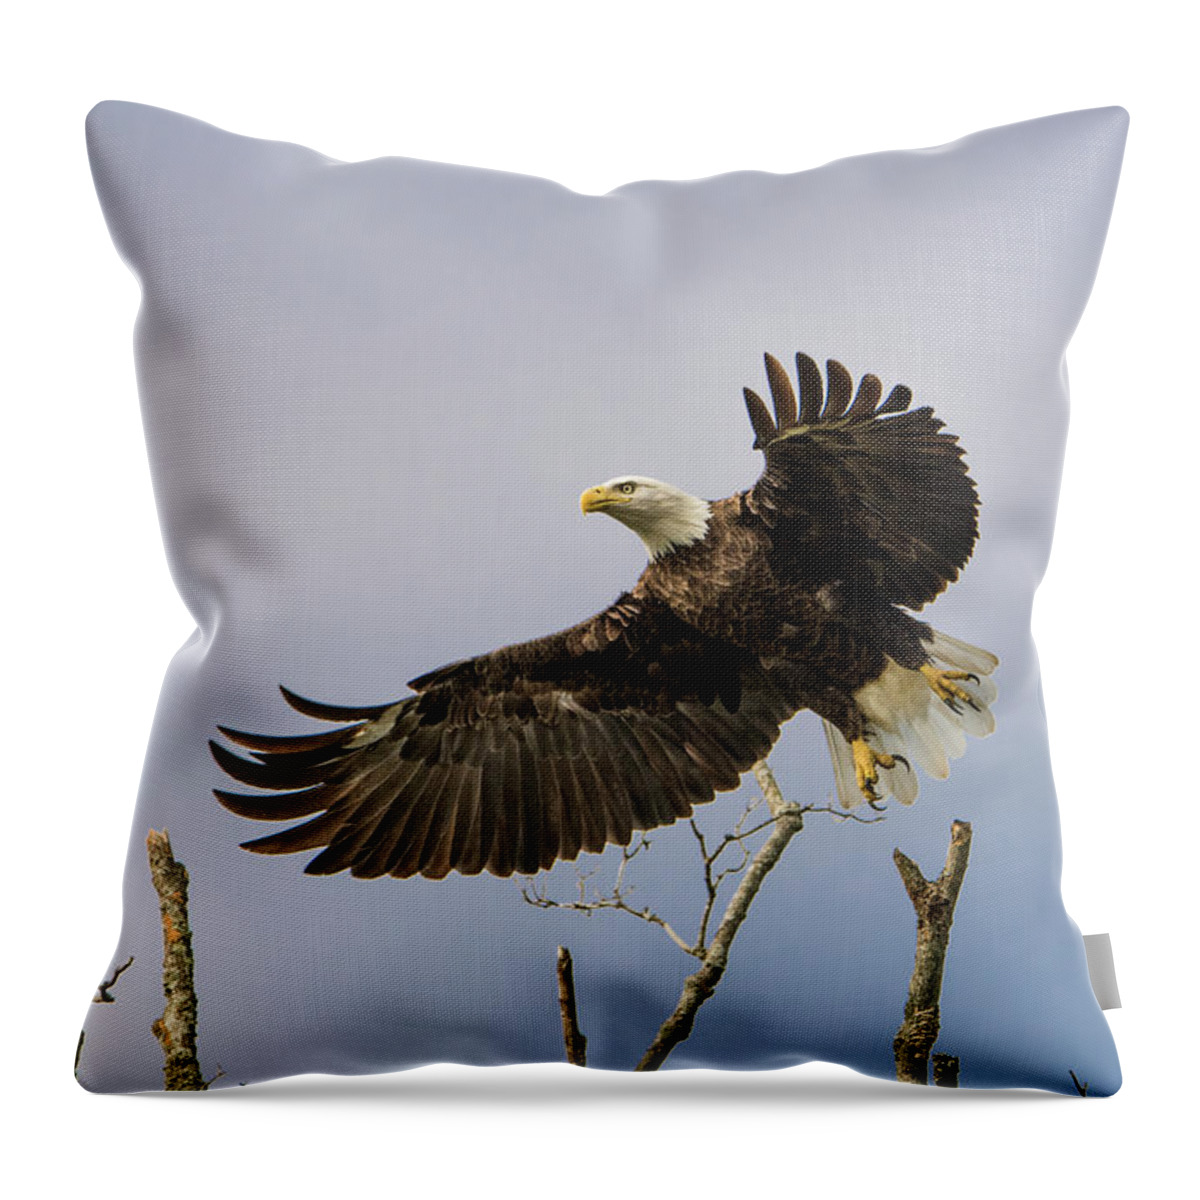 Bald Eagle Throw Pillow featuring the photograph Bald Eagle by Linda Shannon Morgan